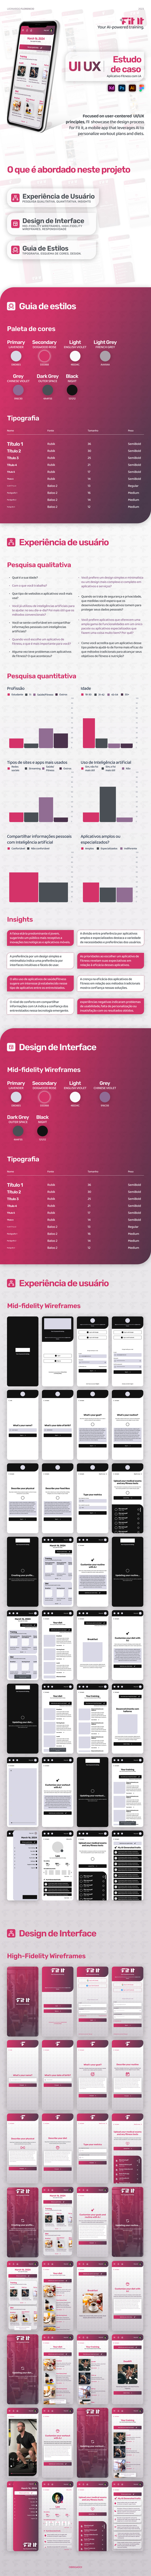 uiux design de produto Figma UI ux branding  user interface Prototyping wireframe high fidelity wireframe